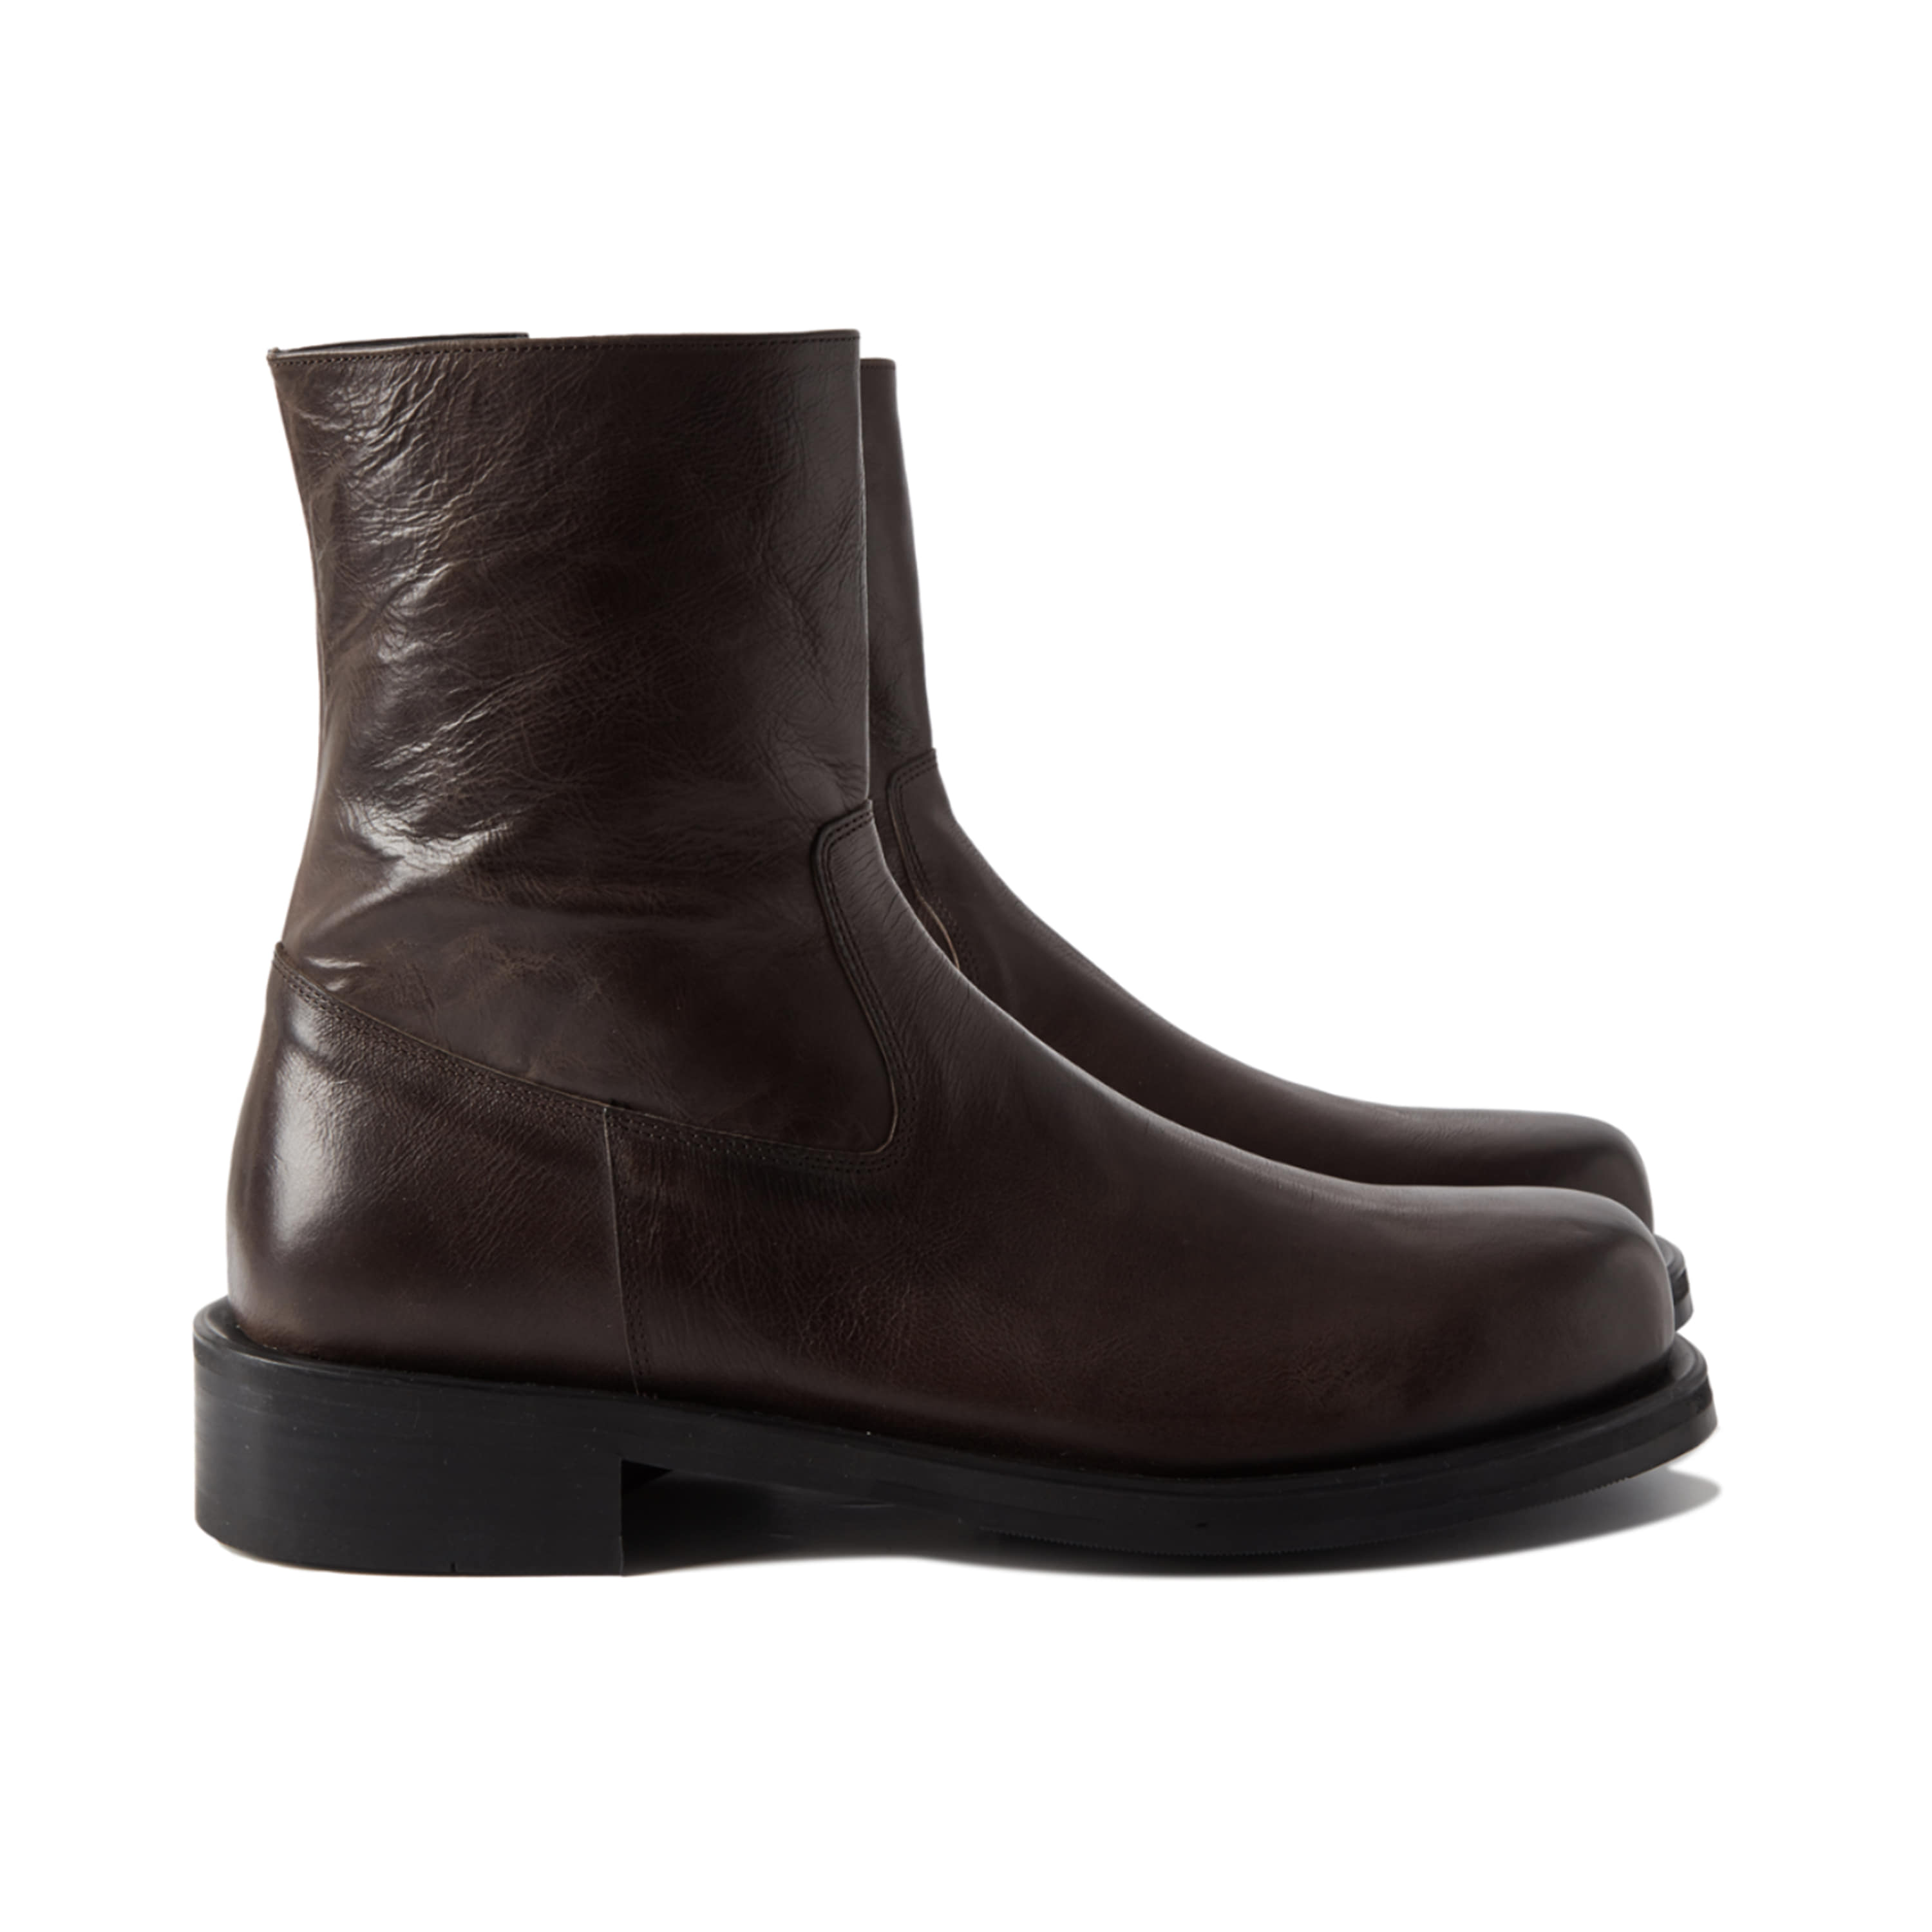 mmrb crack boots (brown)